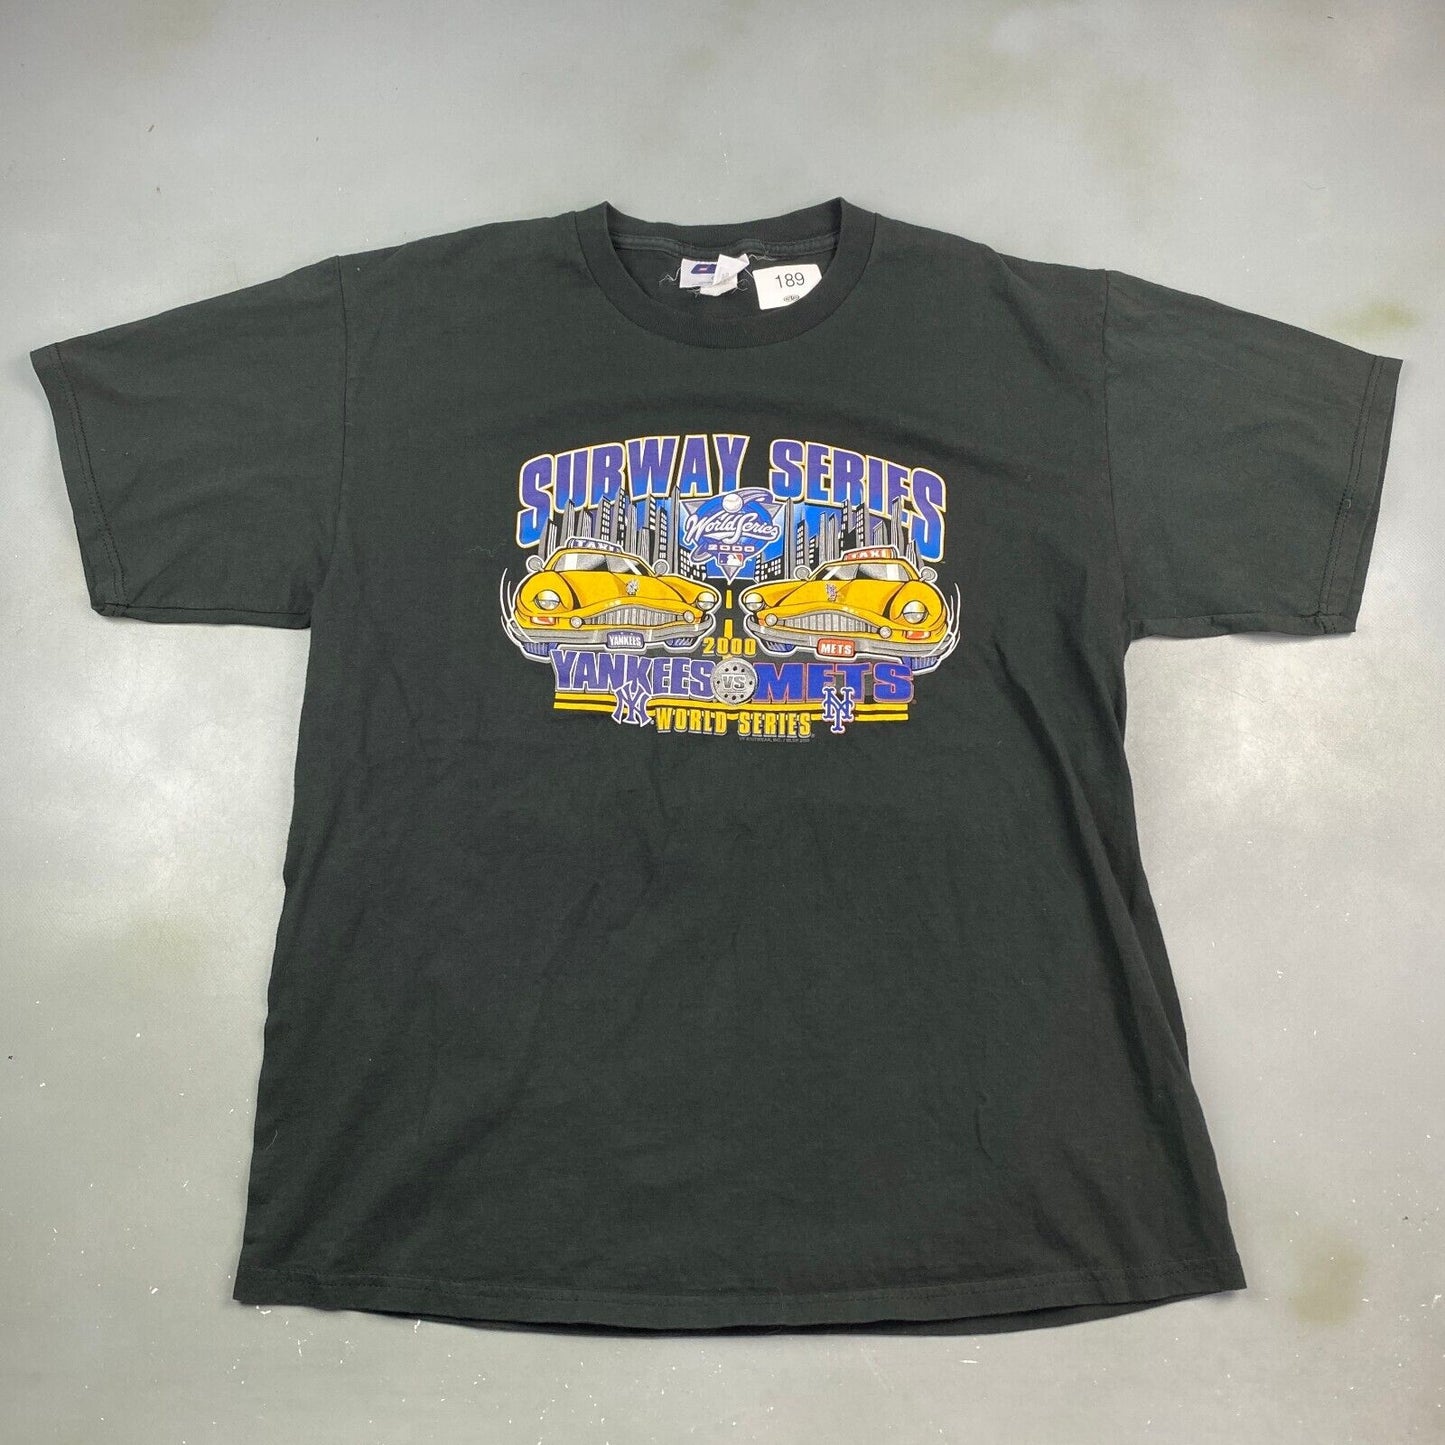 VINTAGE 2000 MLB Subway Series NY Yankees VS Mets T-Shirt sz XL Men